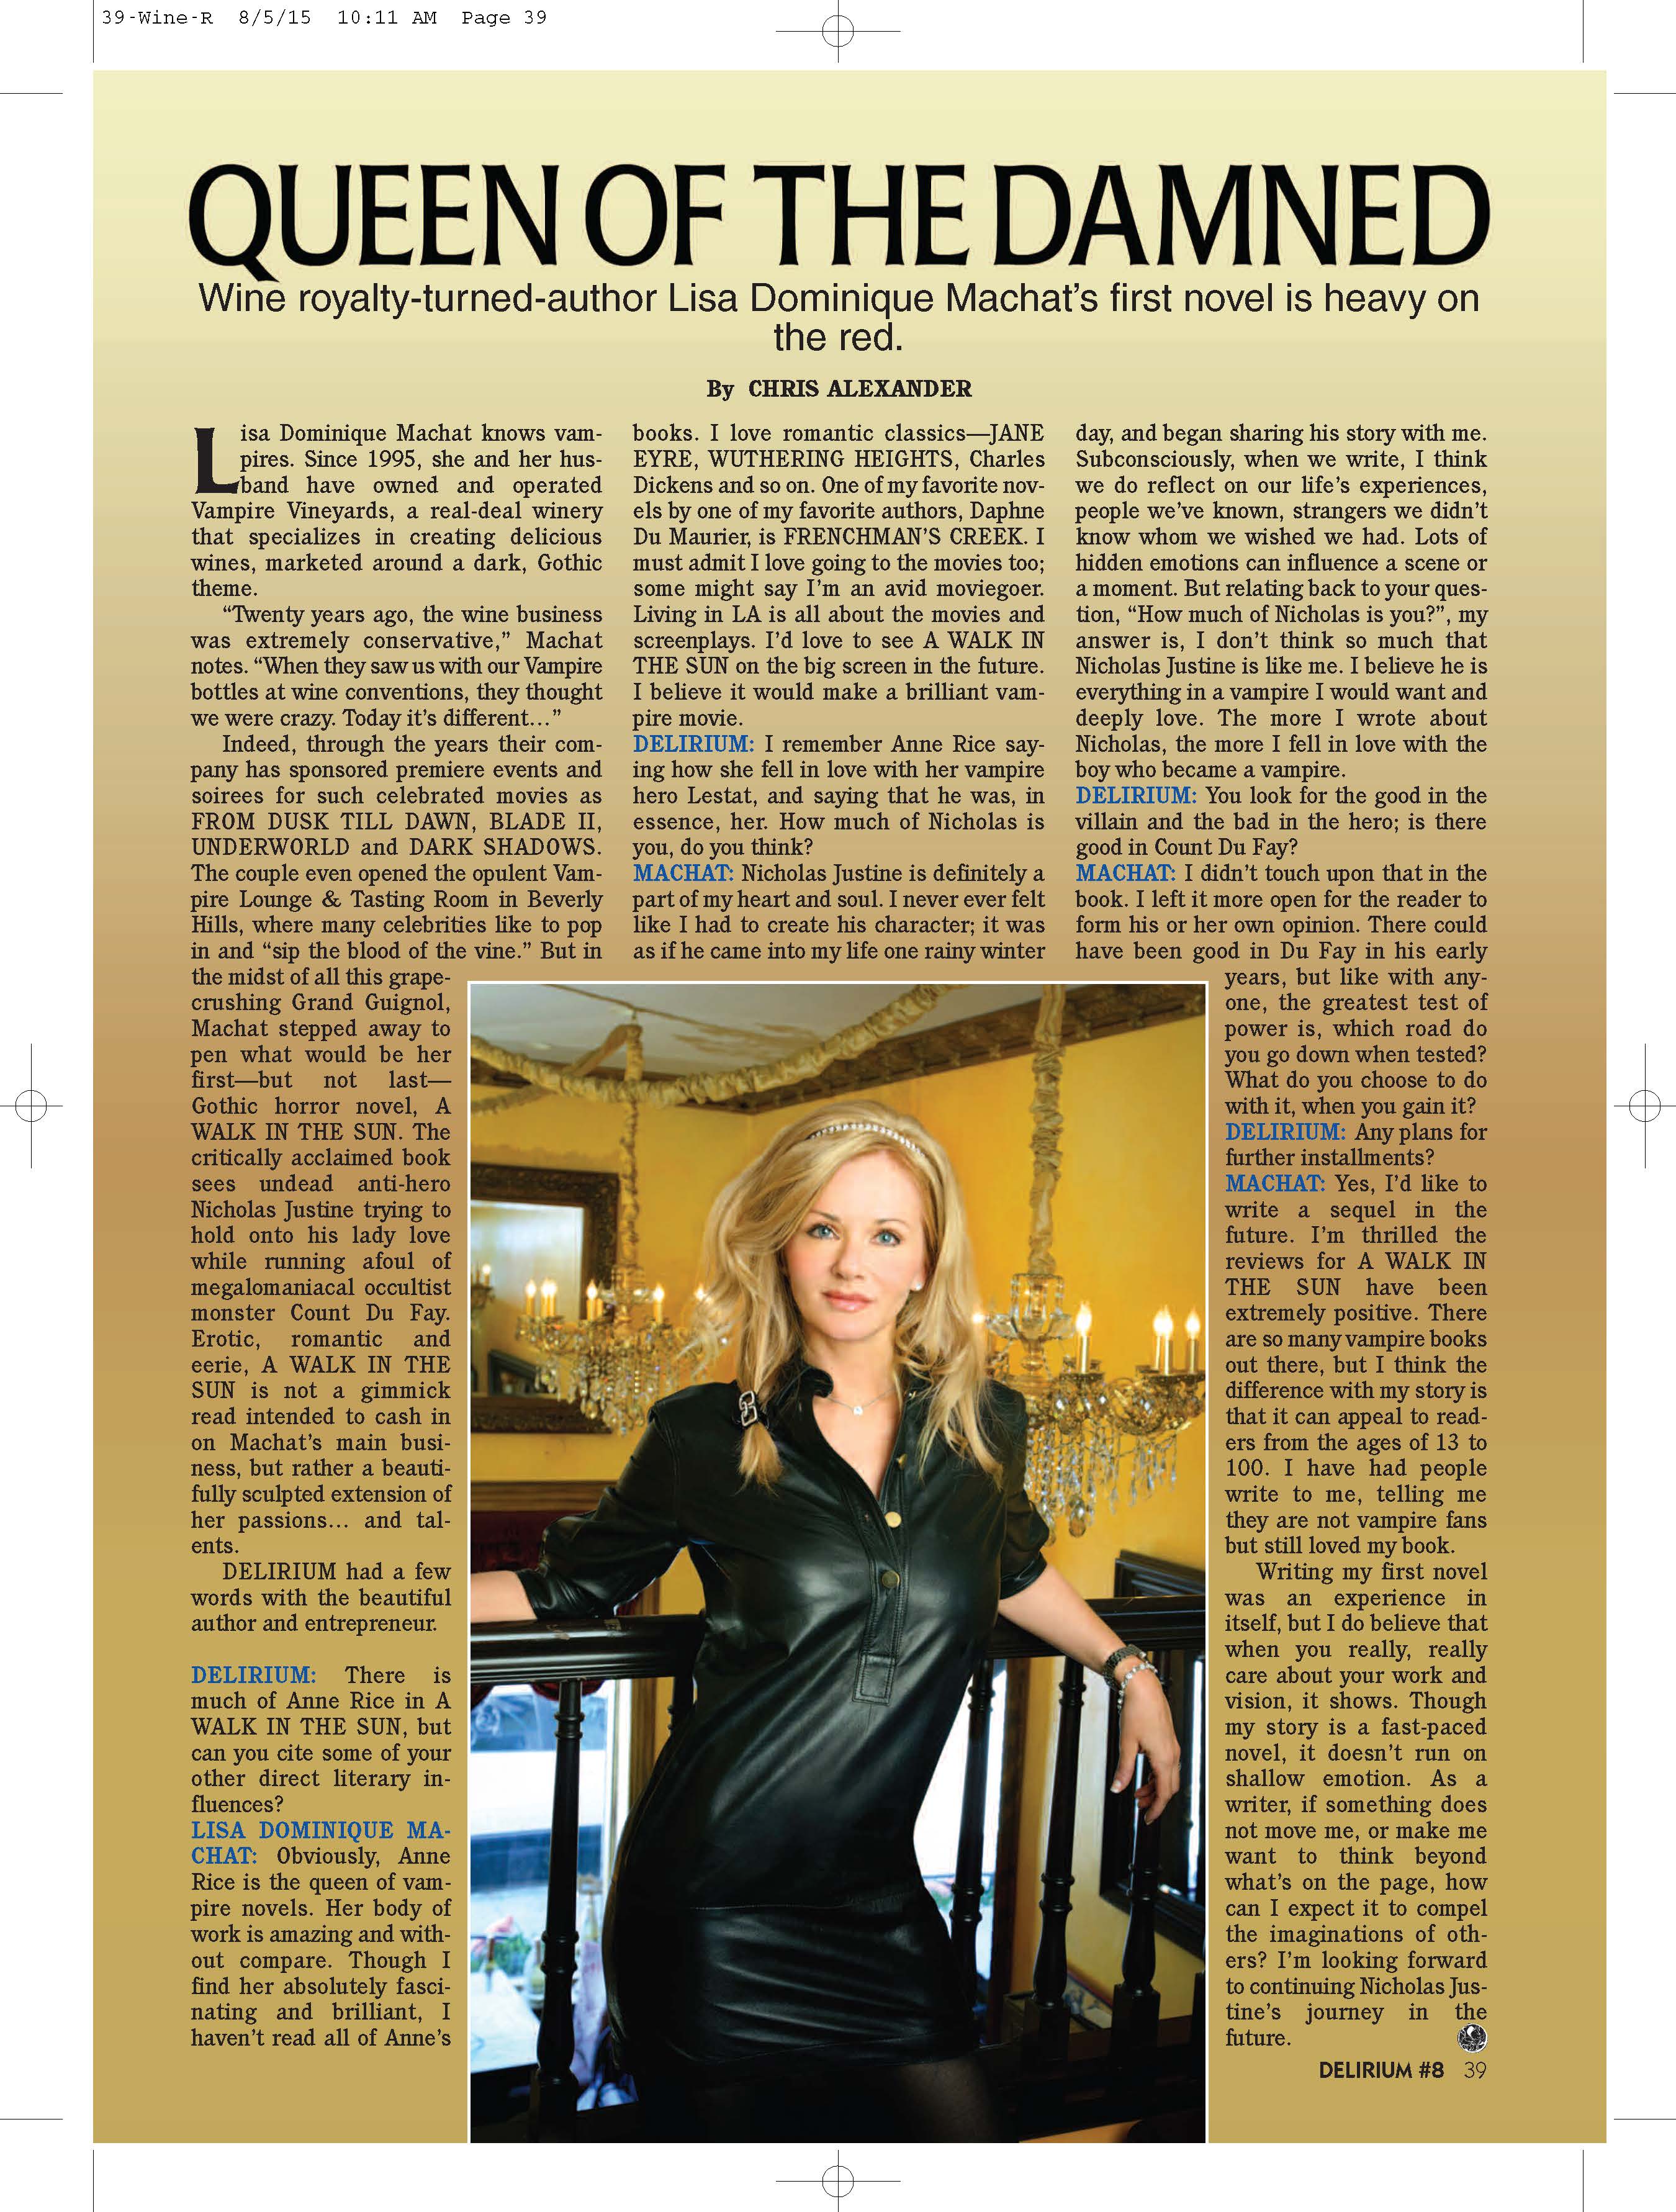 Interview with Lisa Dominique Machat in Delirium Magazine September 2015